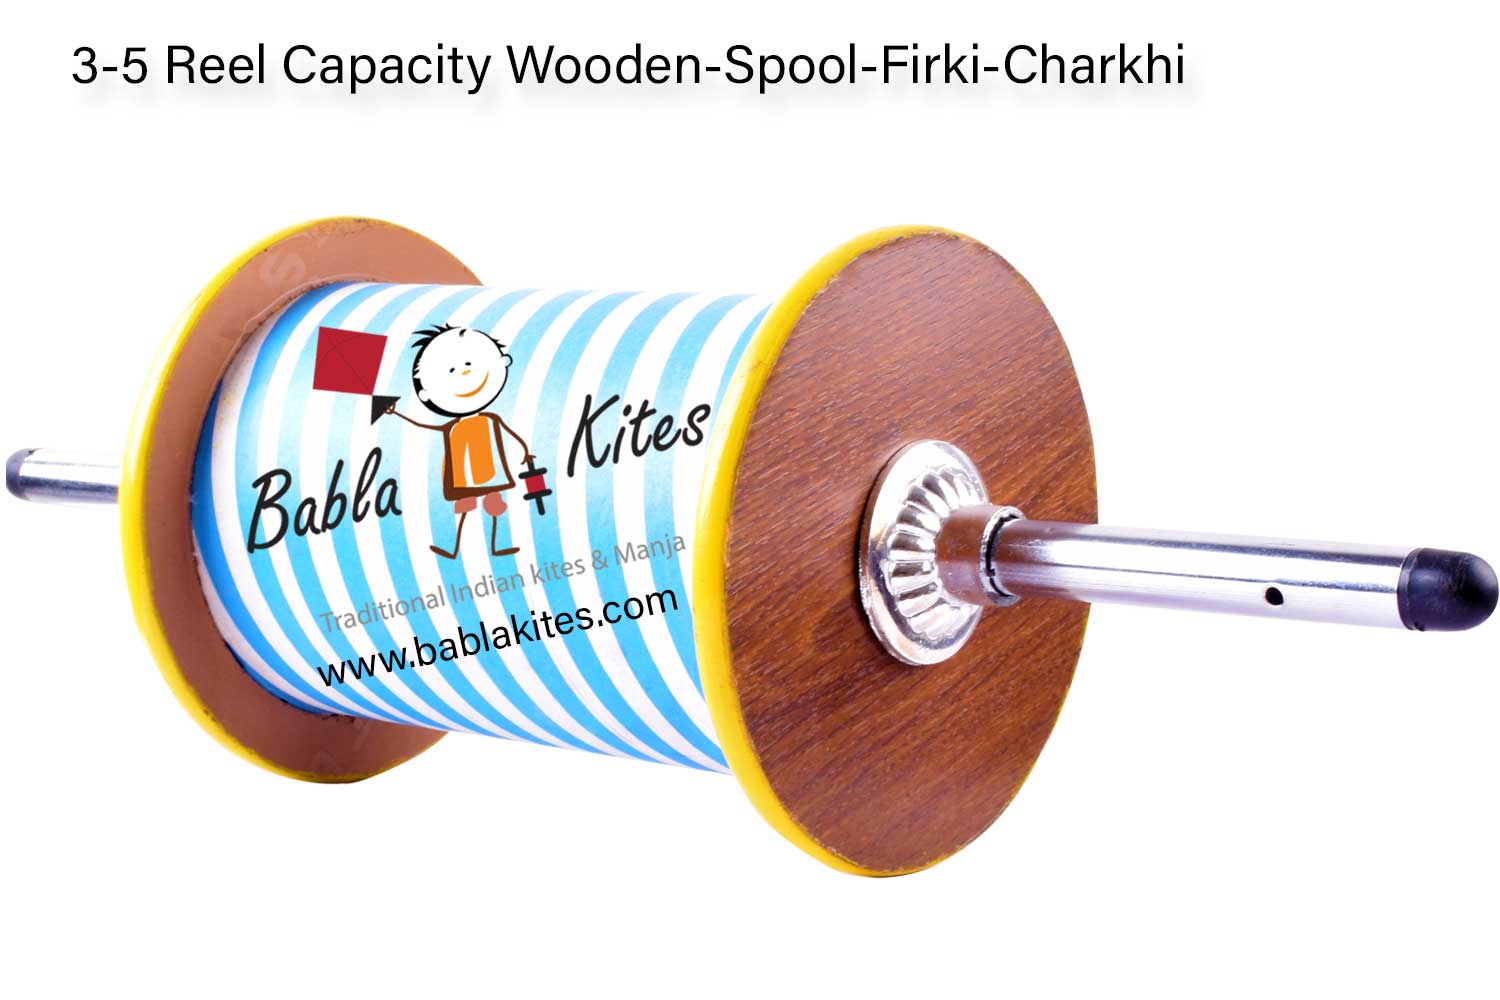 3-5 Reel Capacity Empty Wooden Spool/Firki/Charkhi For Kite Flying